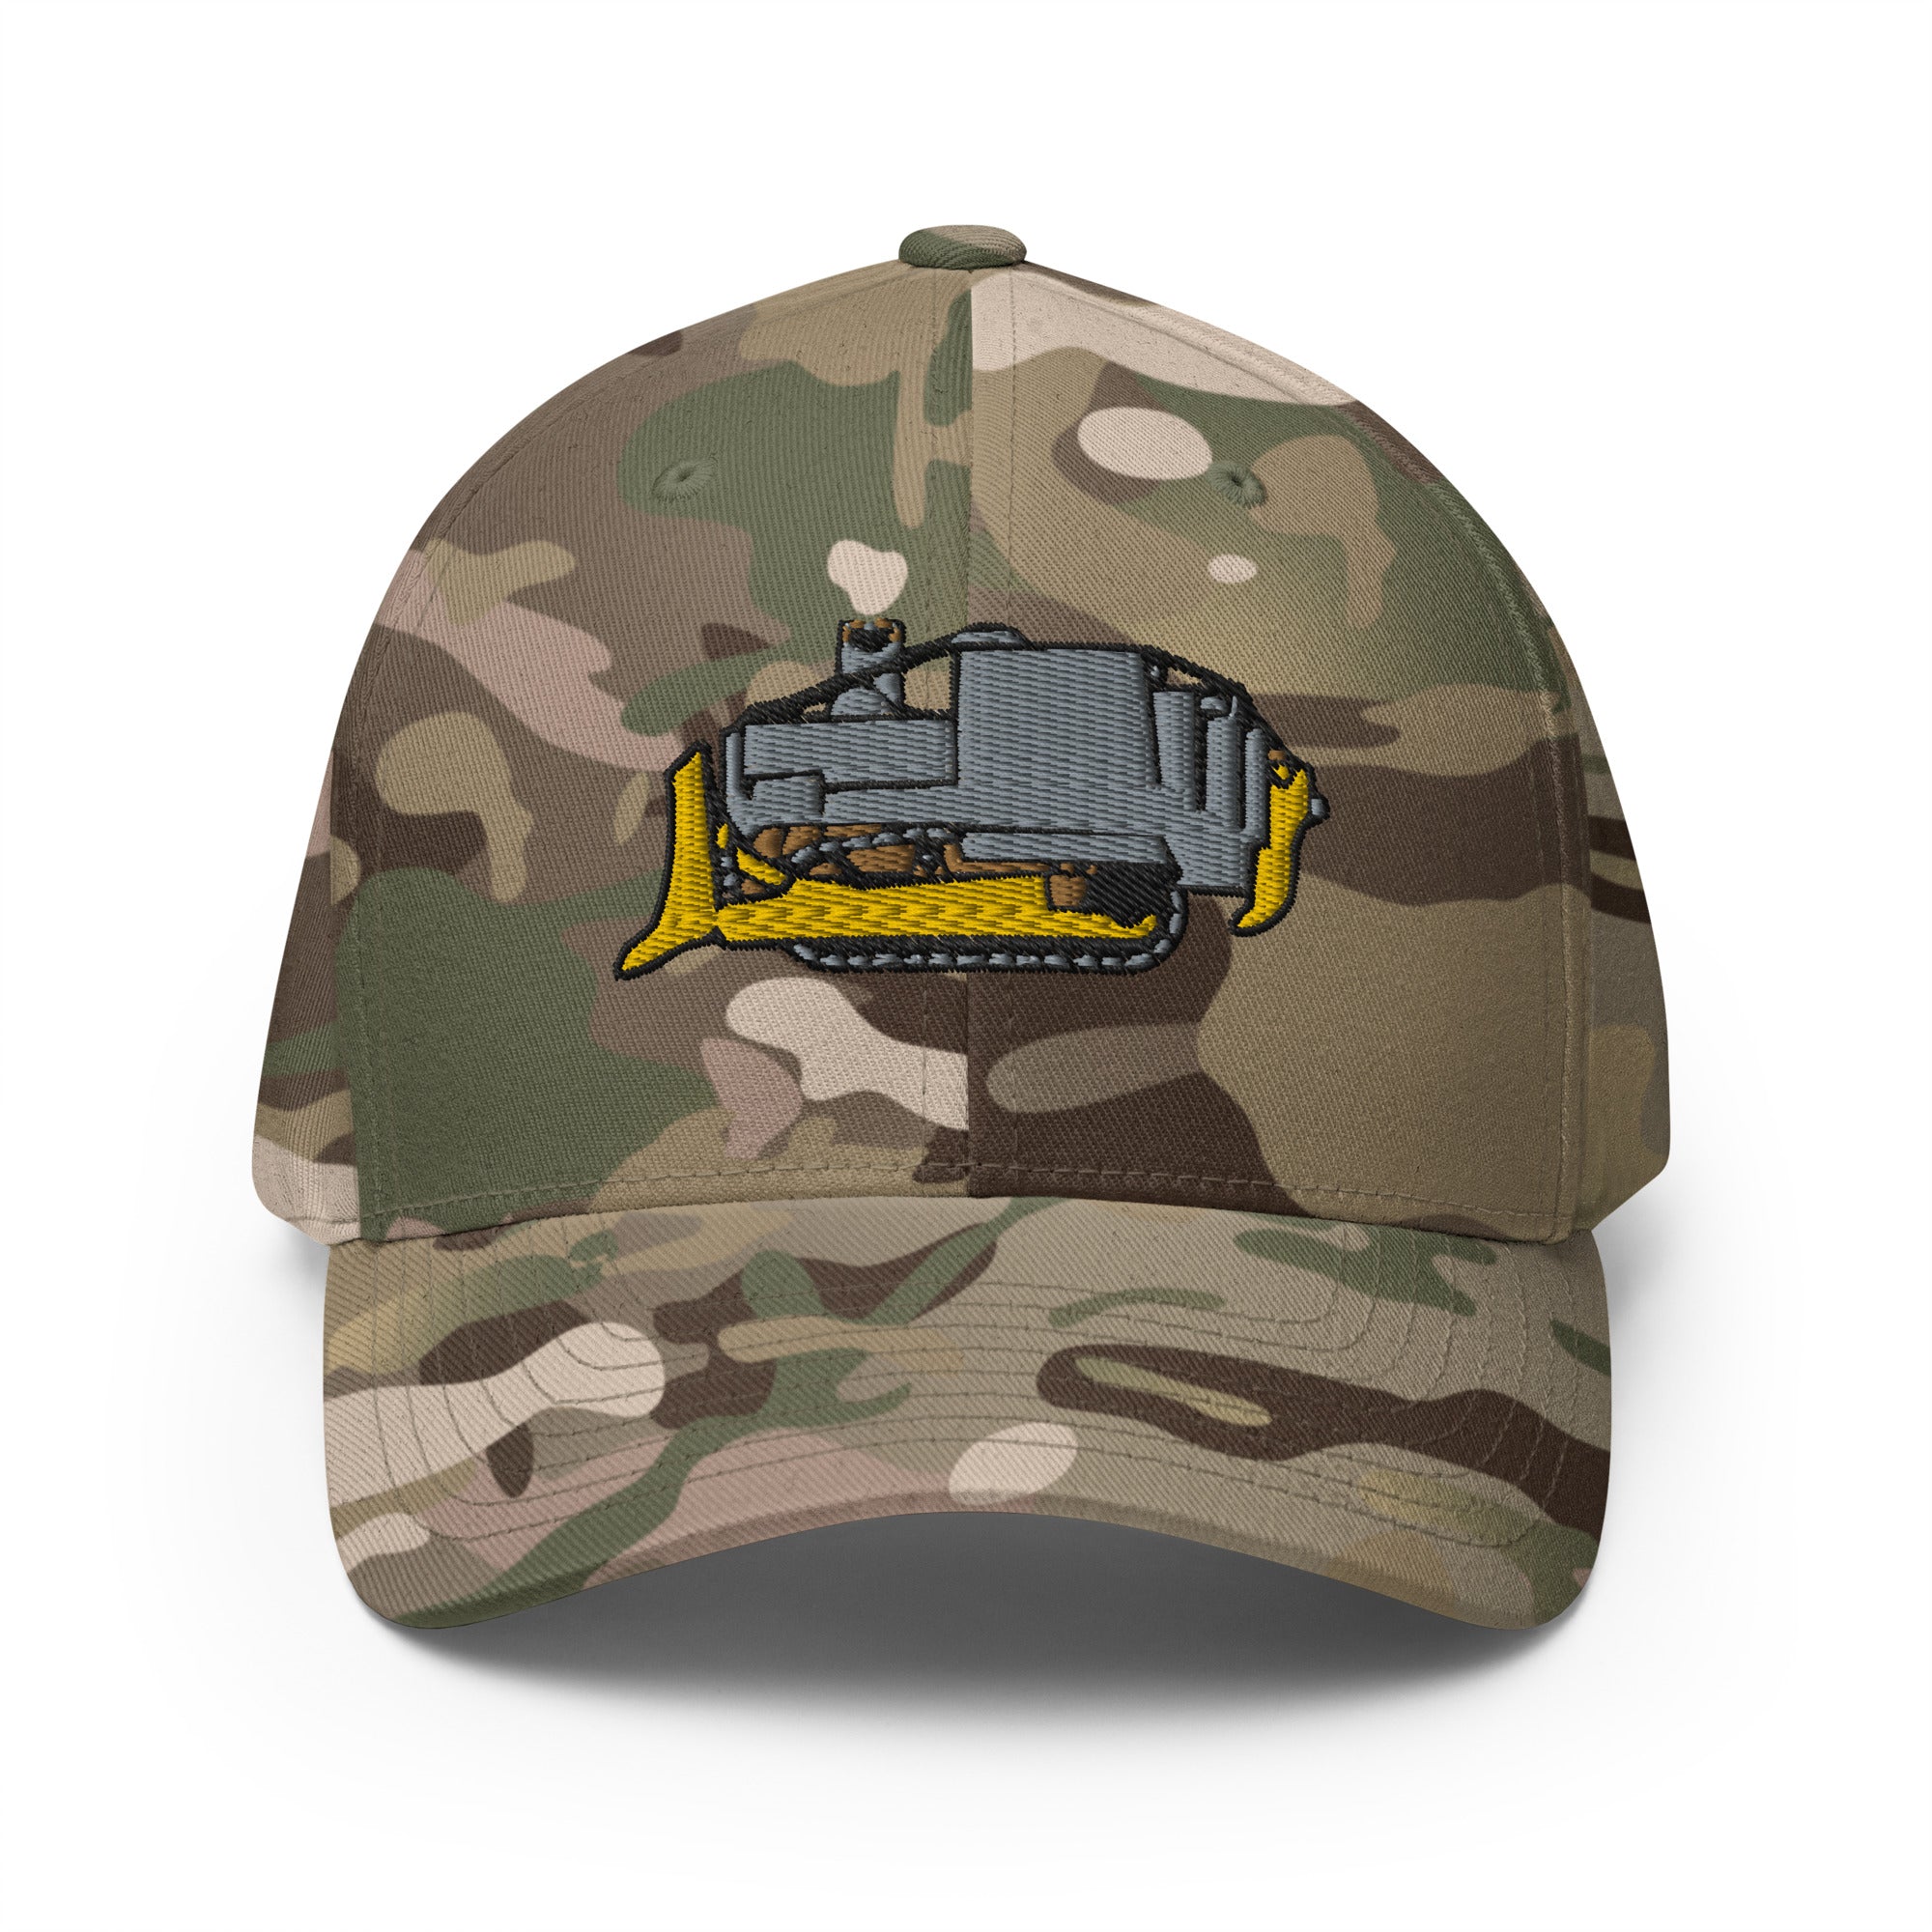 Killdozer Flexfit Fitted Hat